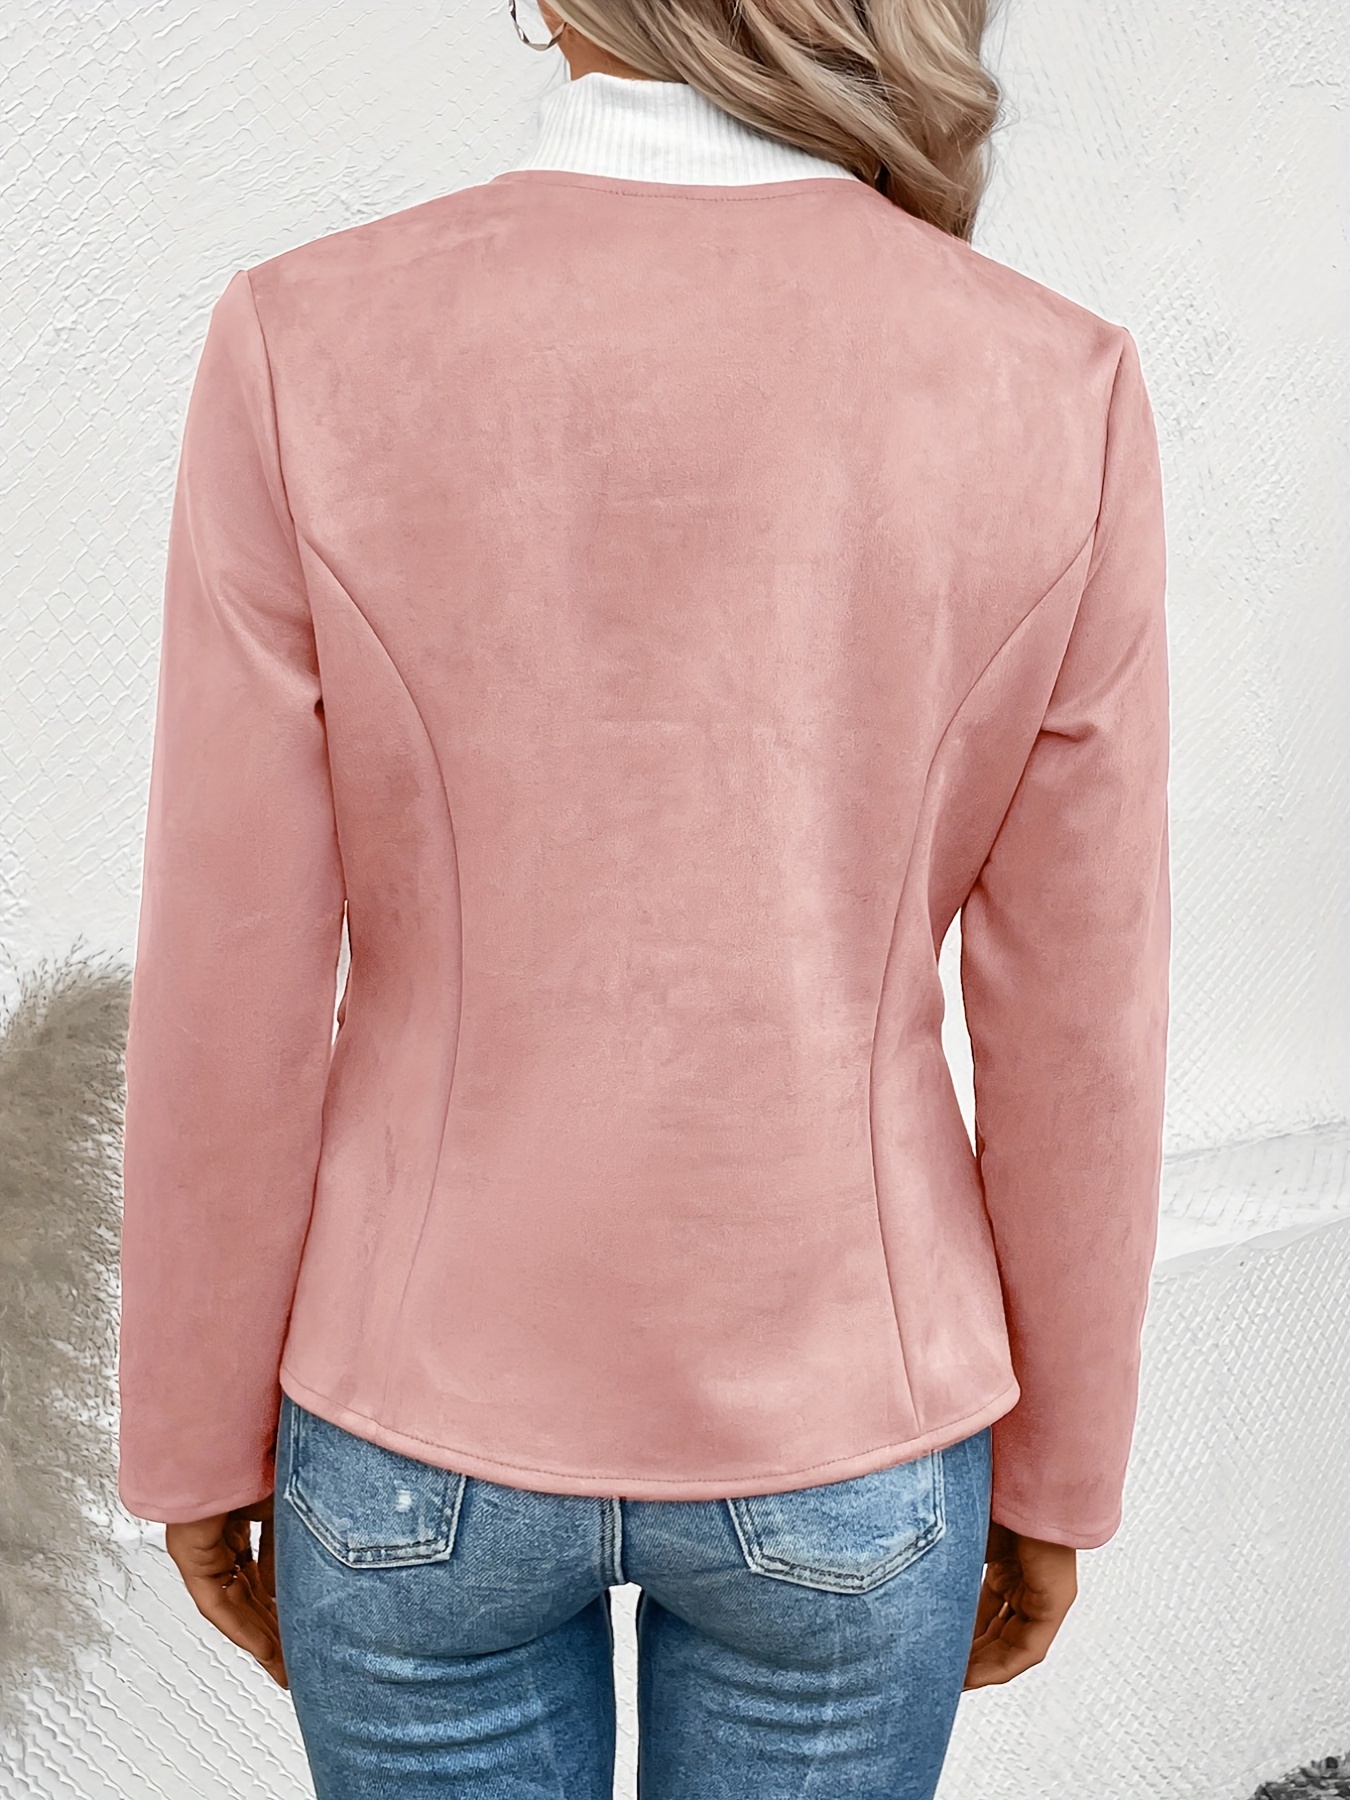 NYDJ Sweatshirt Blazer - ShopStyle Casual Jackets